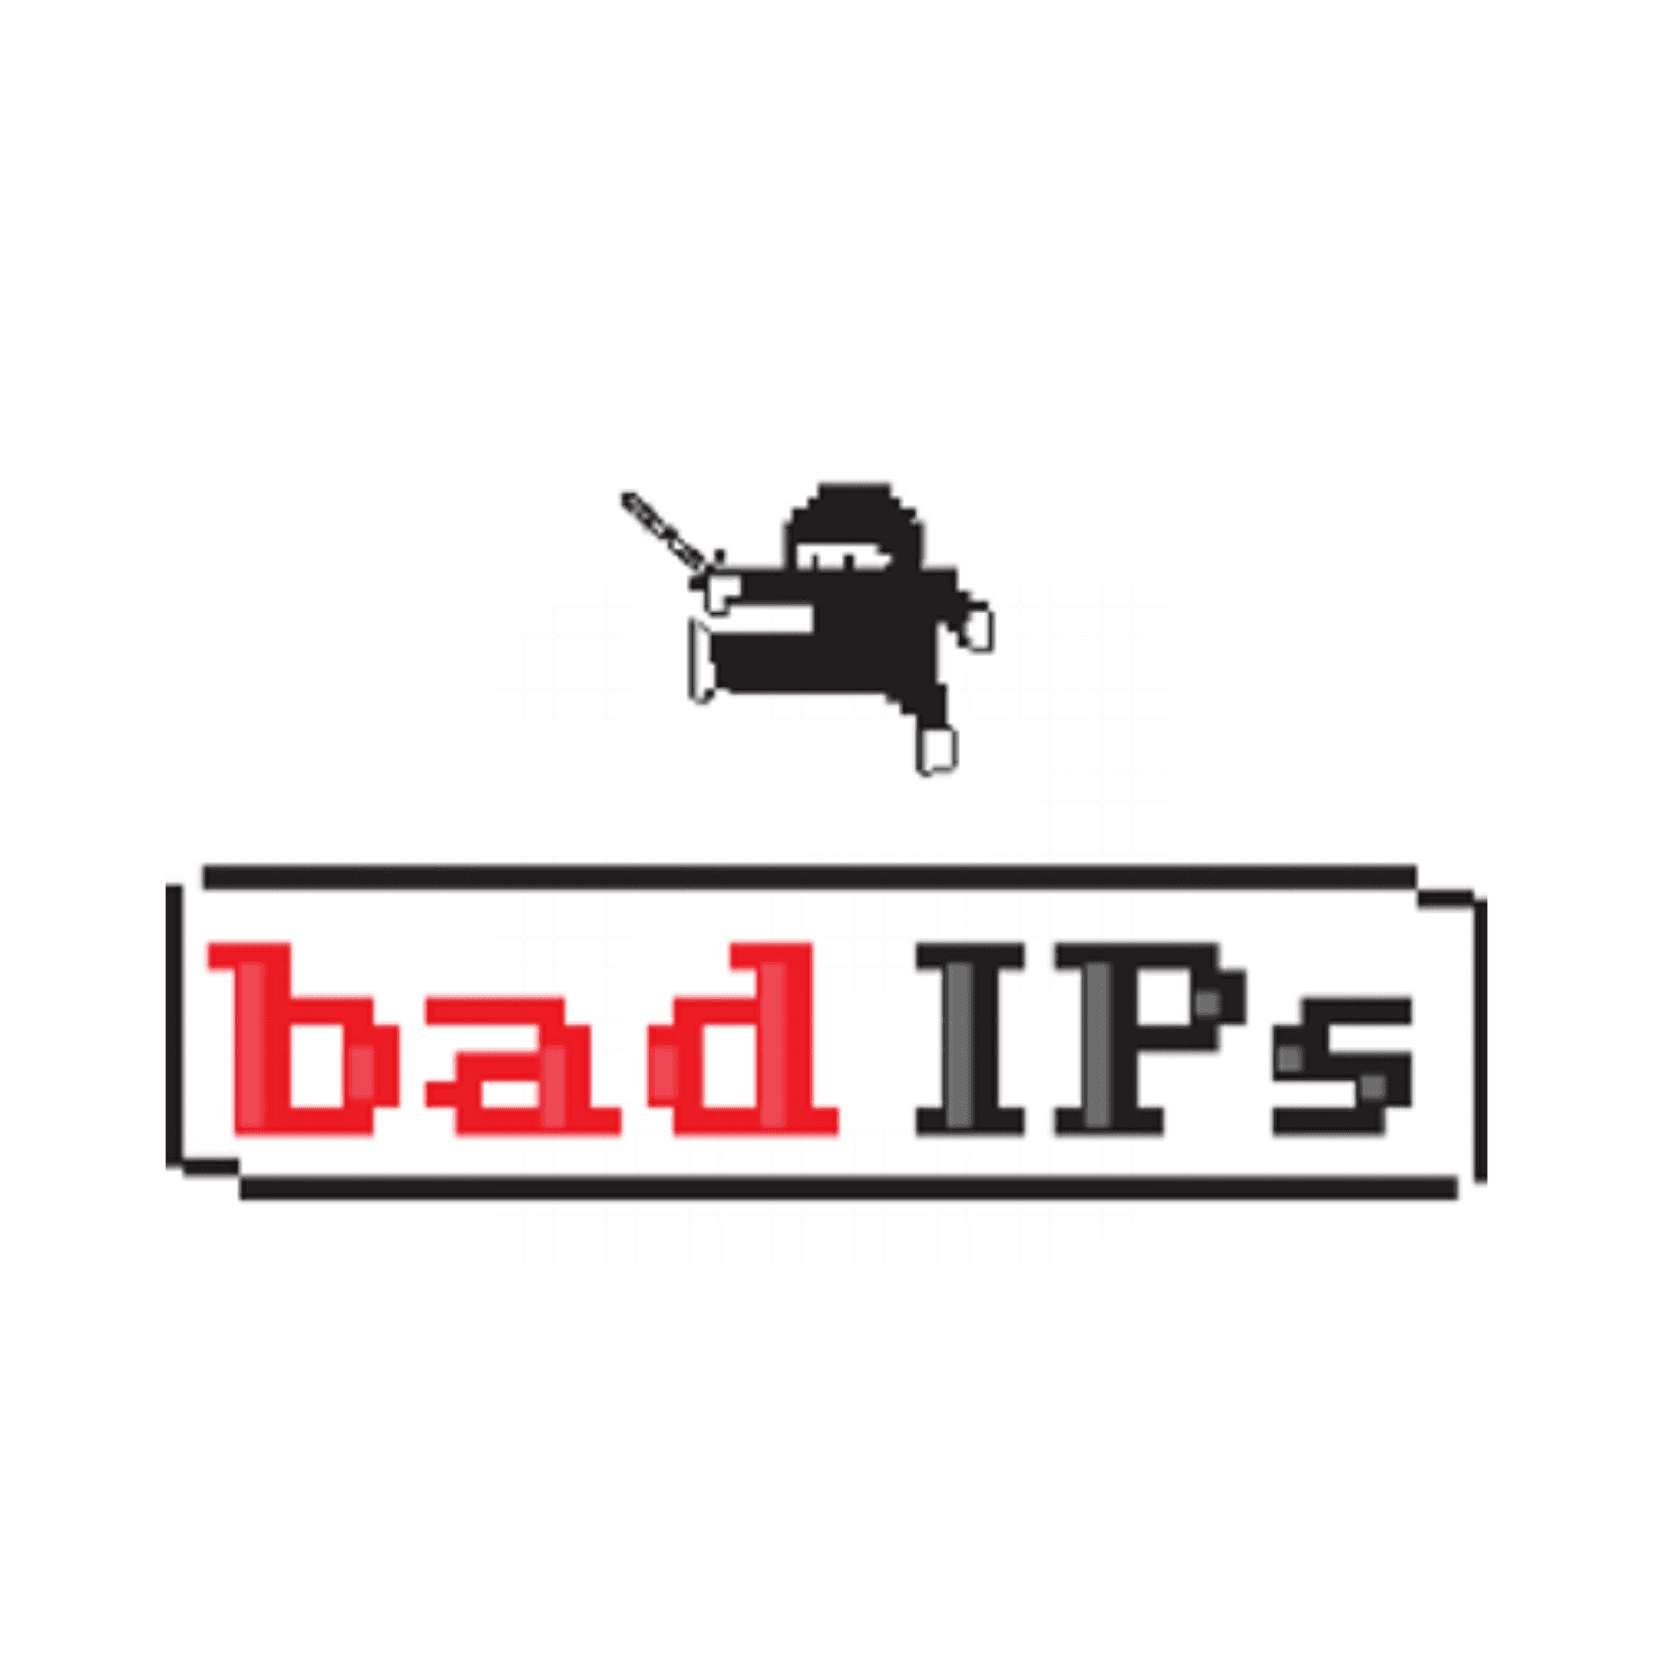 badips.com